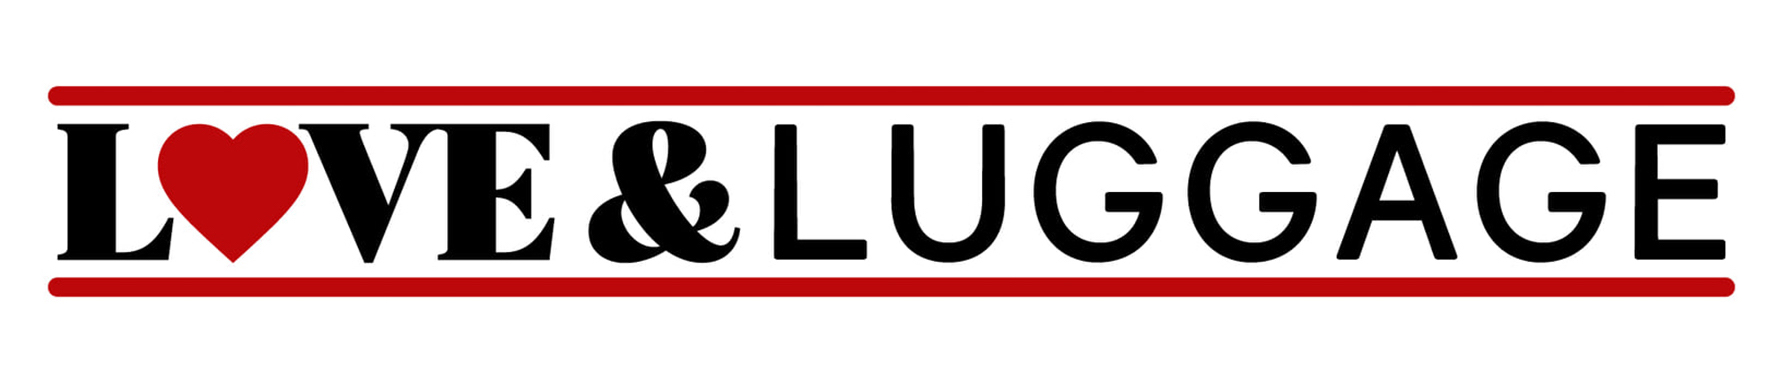 Love & Luggage logo